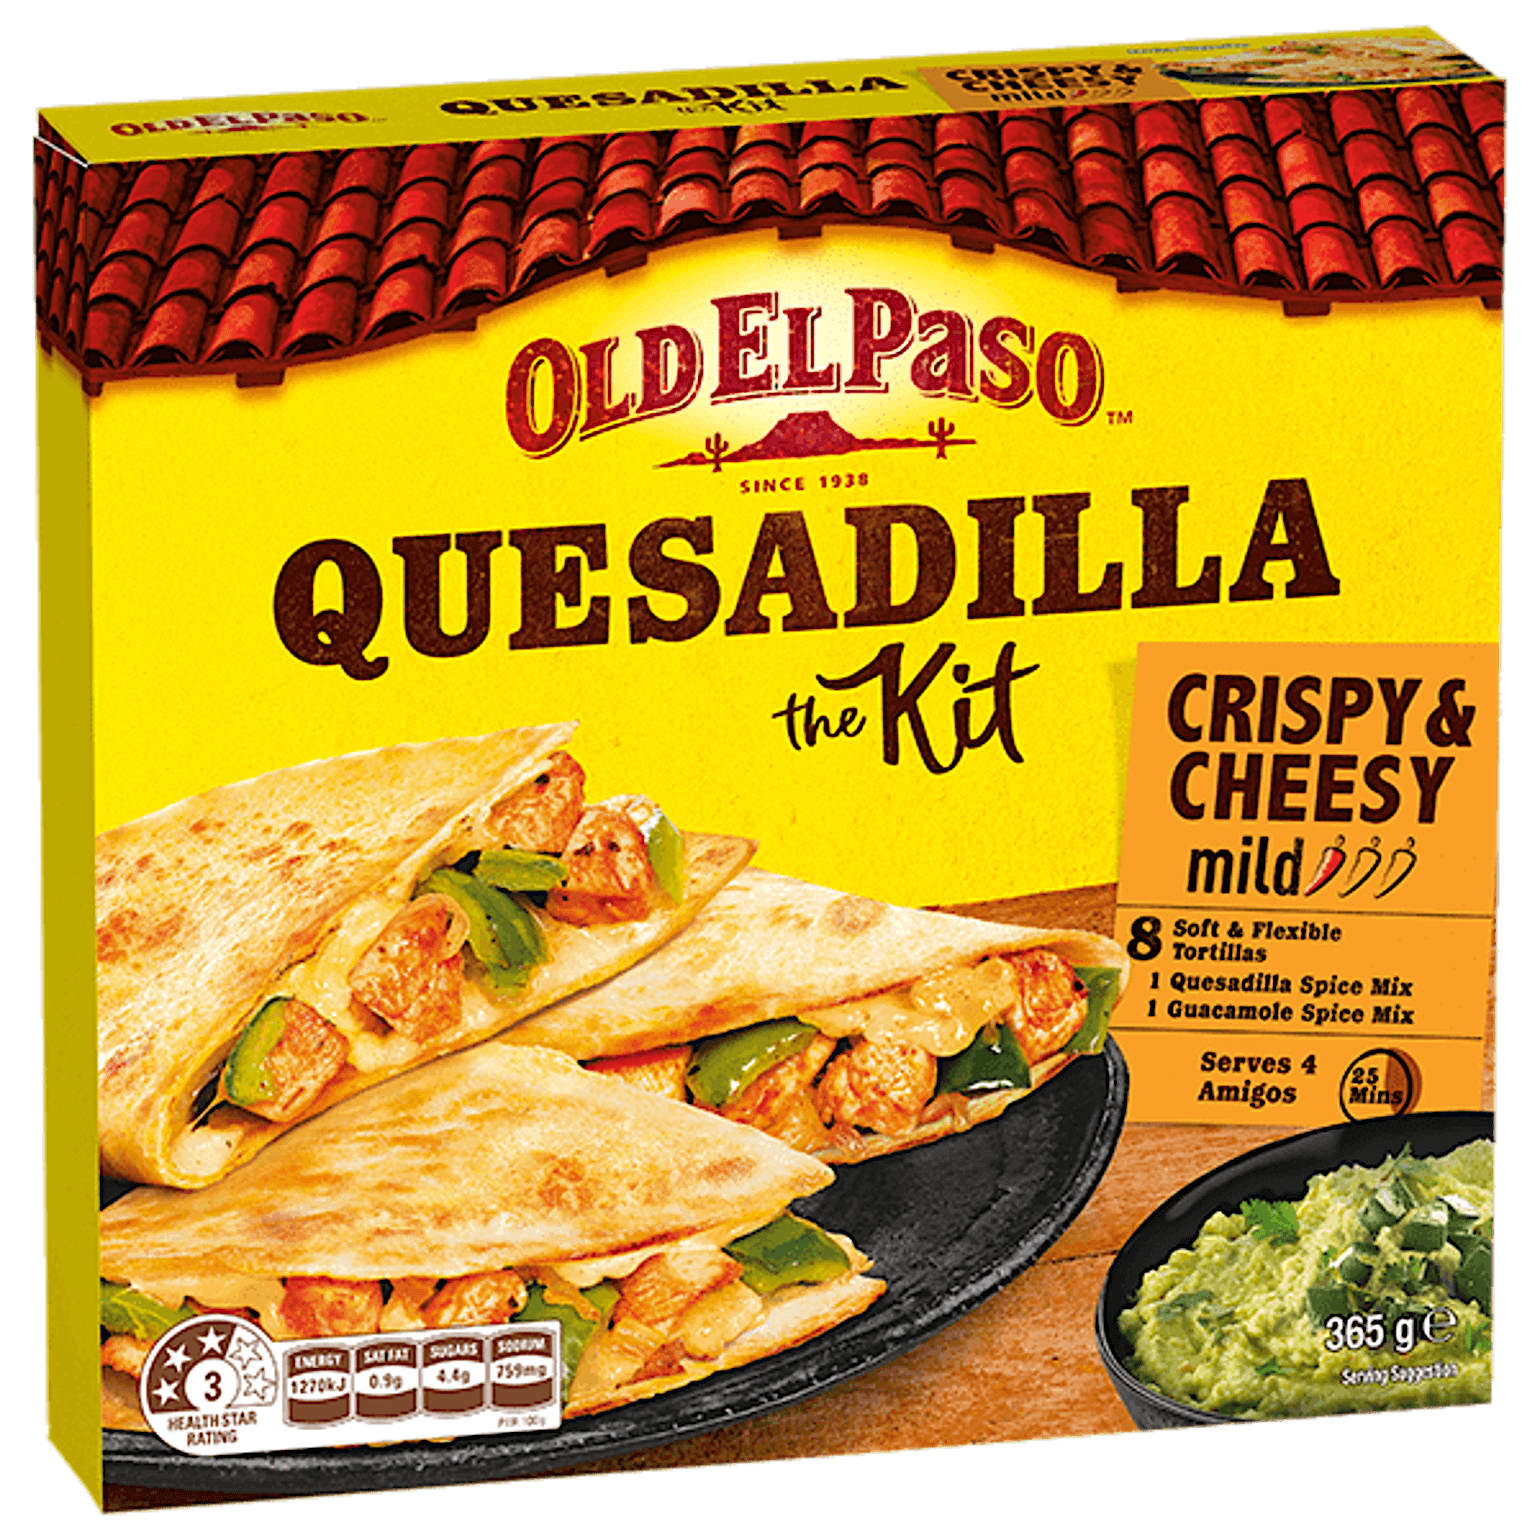 a pack of Old El Paso's crispy & cheesy quesadilla kit mid containing tortillas, quesadilla spice mix & guacamole spice mix